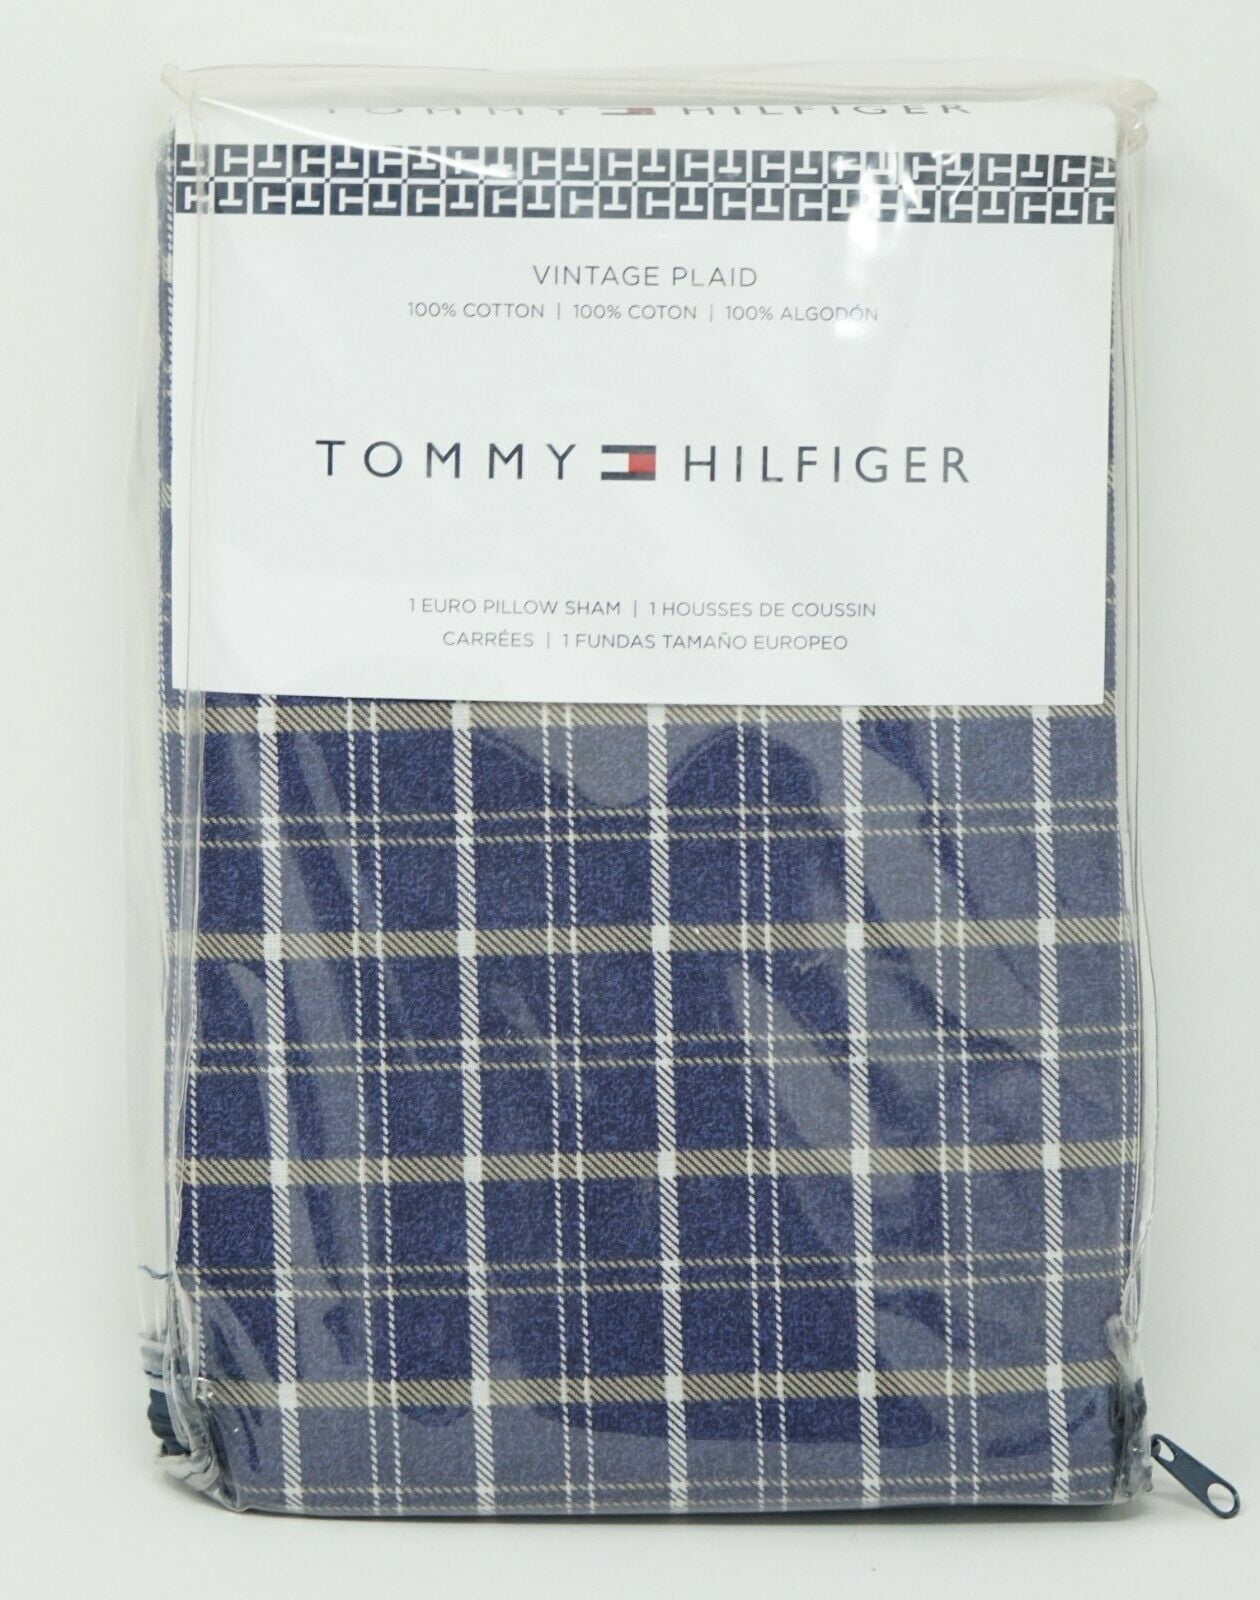 Tommy Hilfiger Vintage Plaid Bedding Bedroom Décor Collection, 100% ...